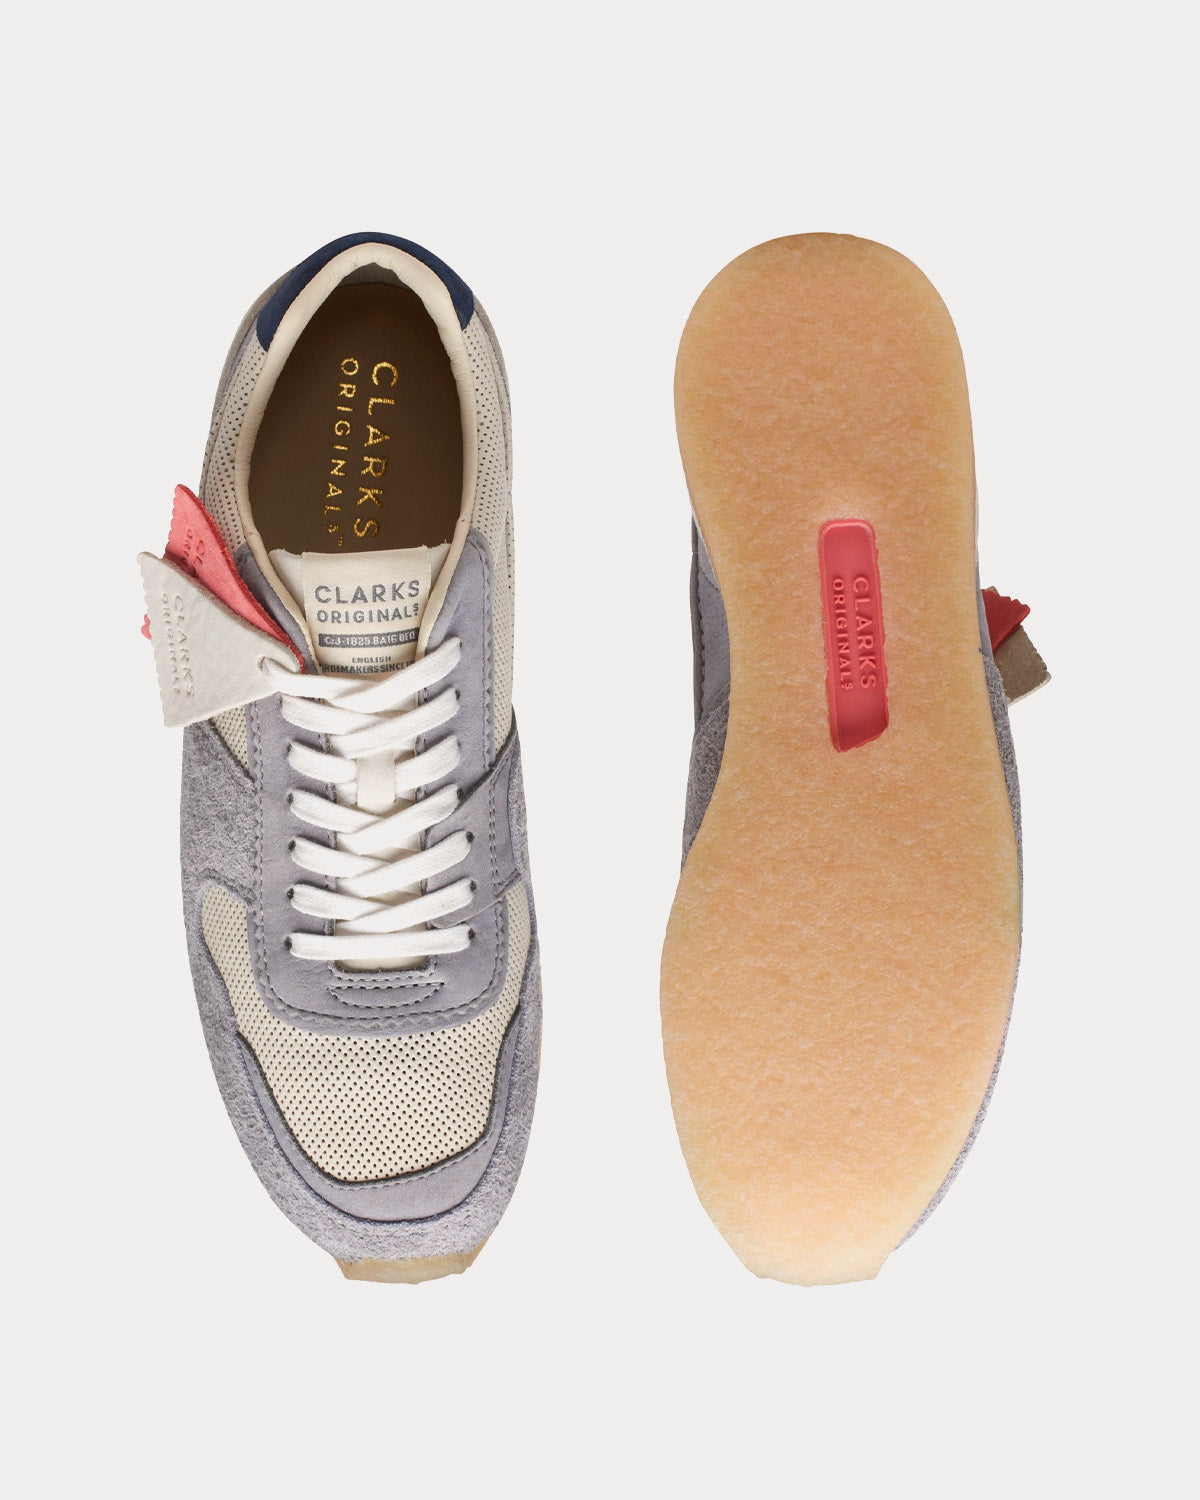 Clarks - Tor Run Grey / White Low Top Sneakers